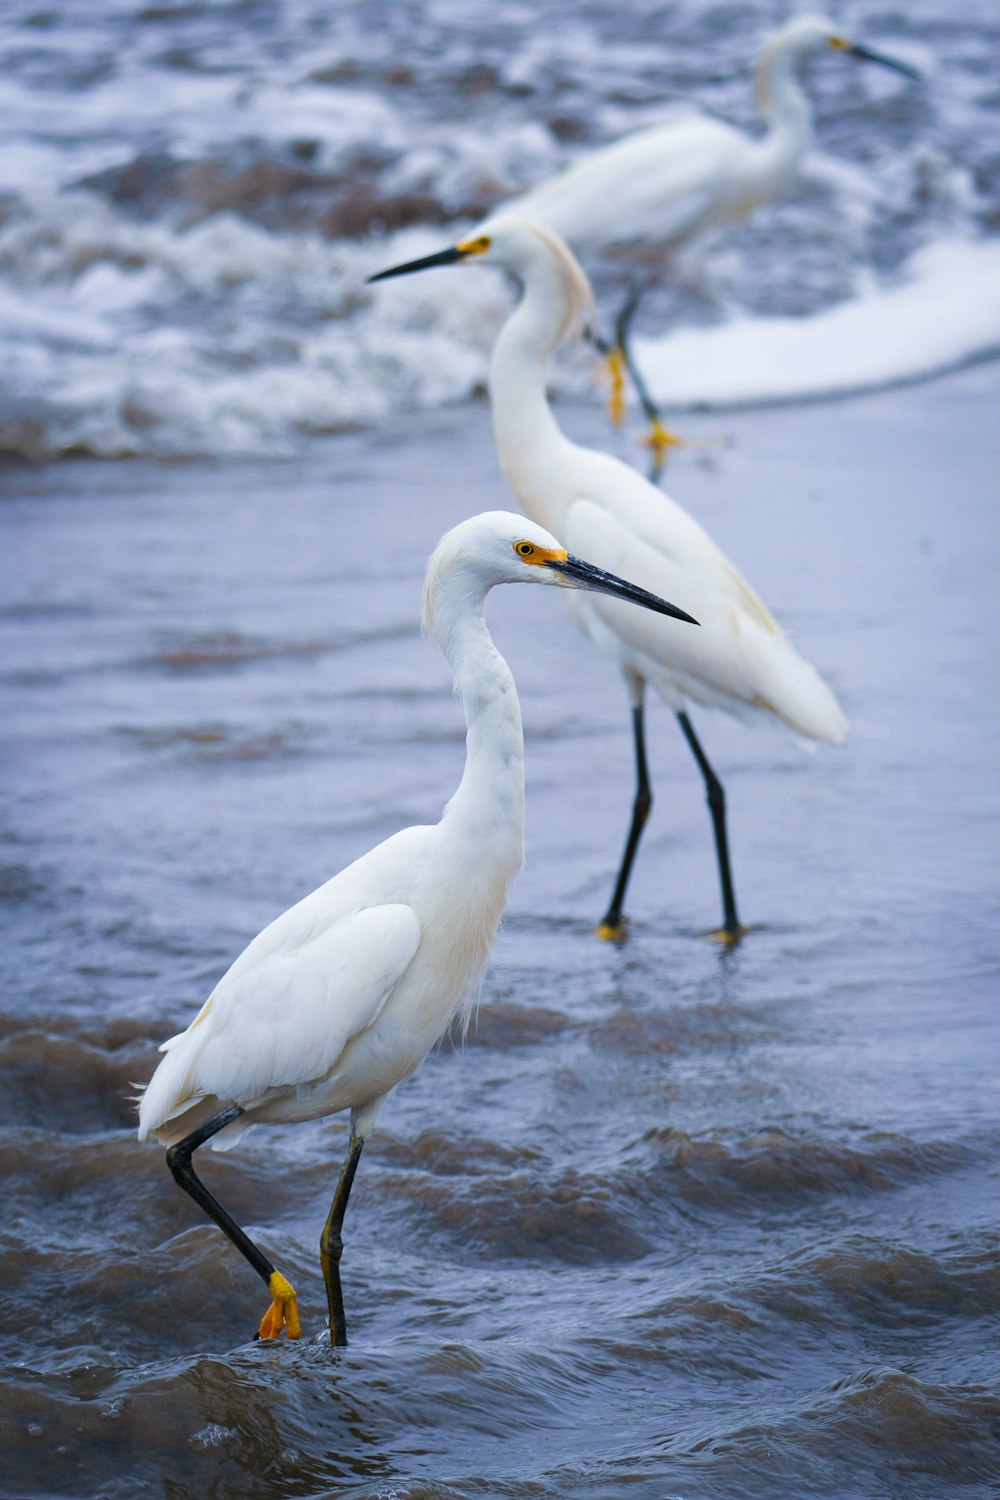 Un gruppo di uccelli bianchi in piedi sulla cima di una spiaggia